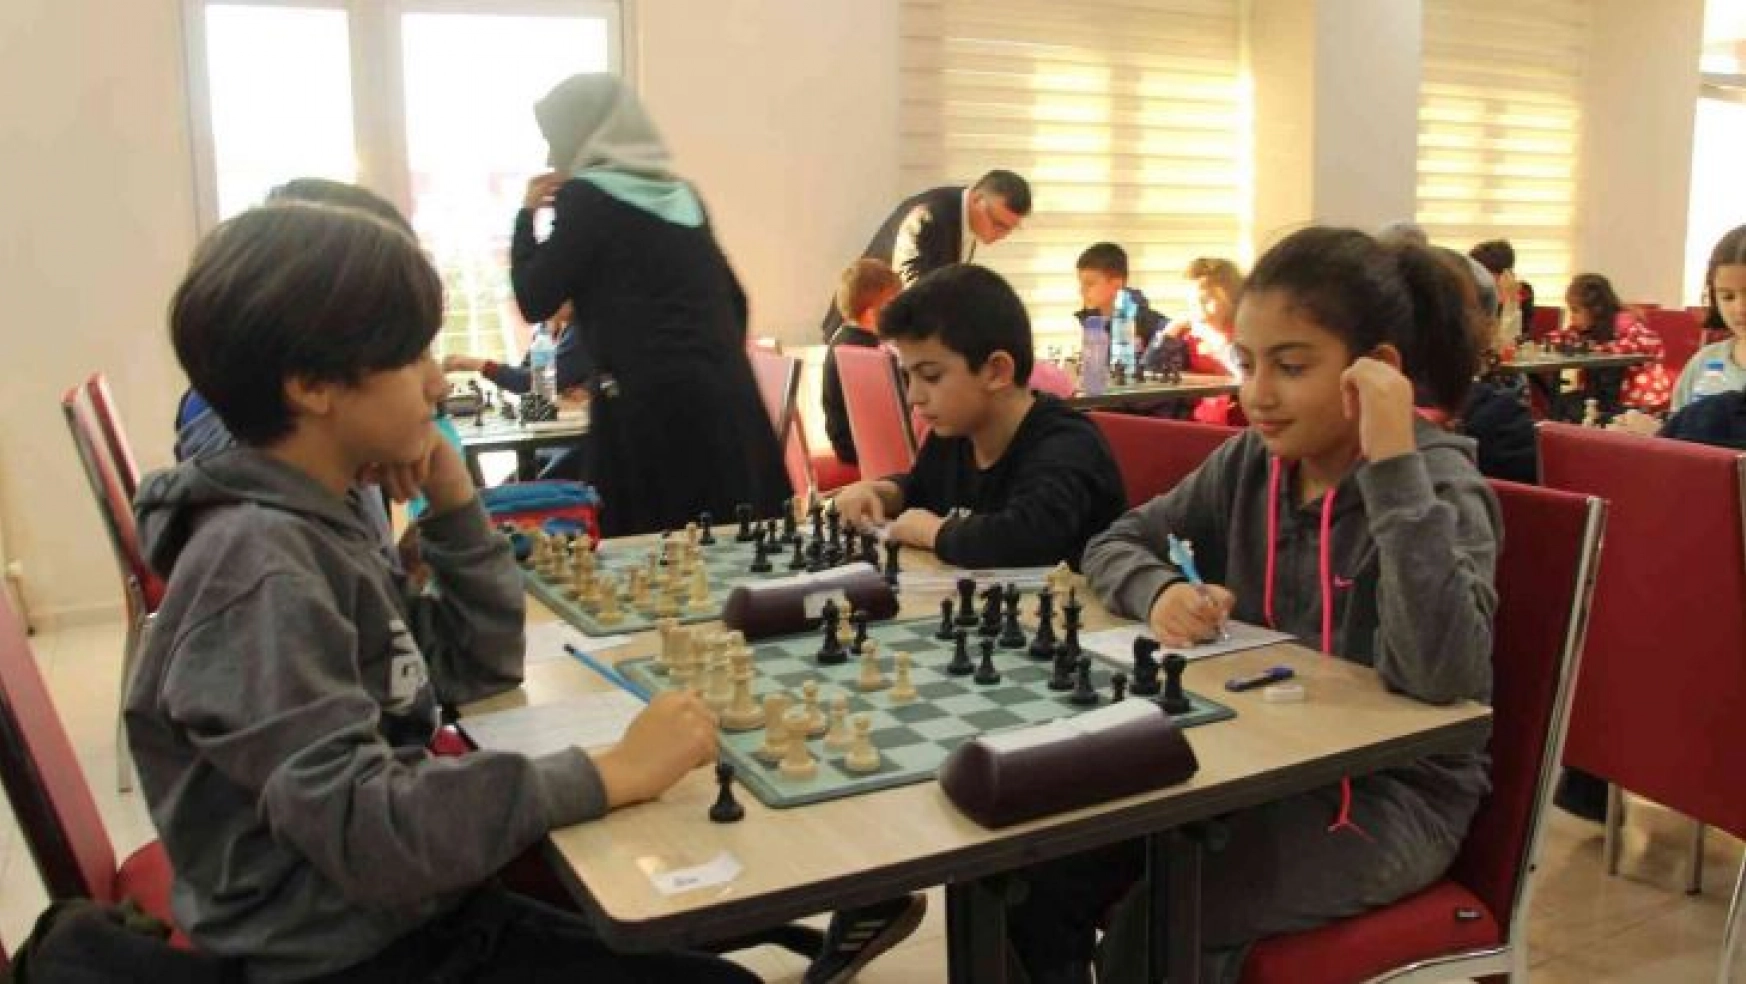 Siirt'te satranç turnuvasında anne oğluna rakip oldu